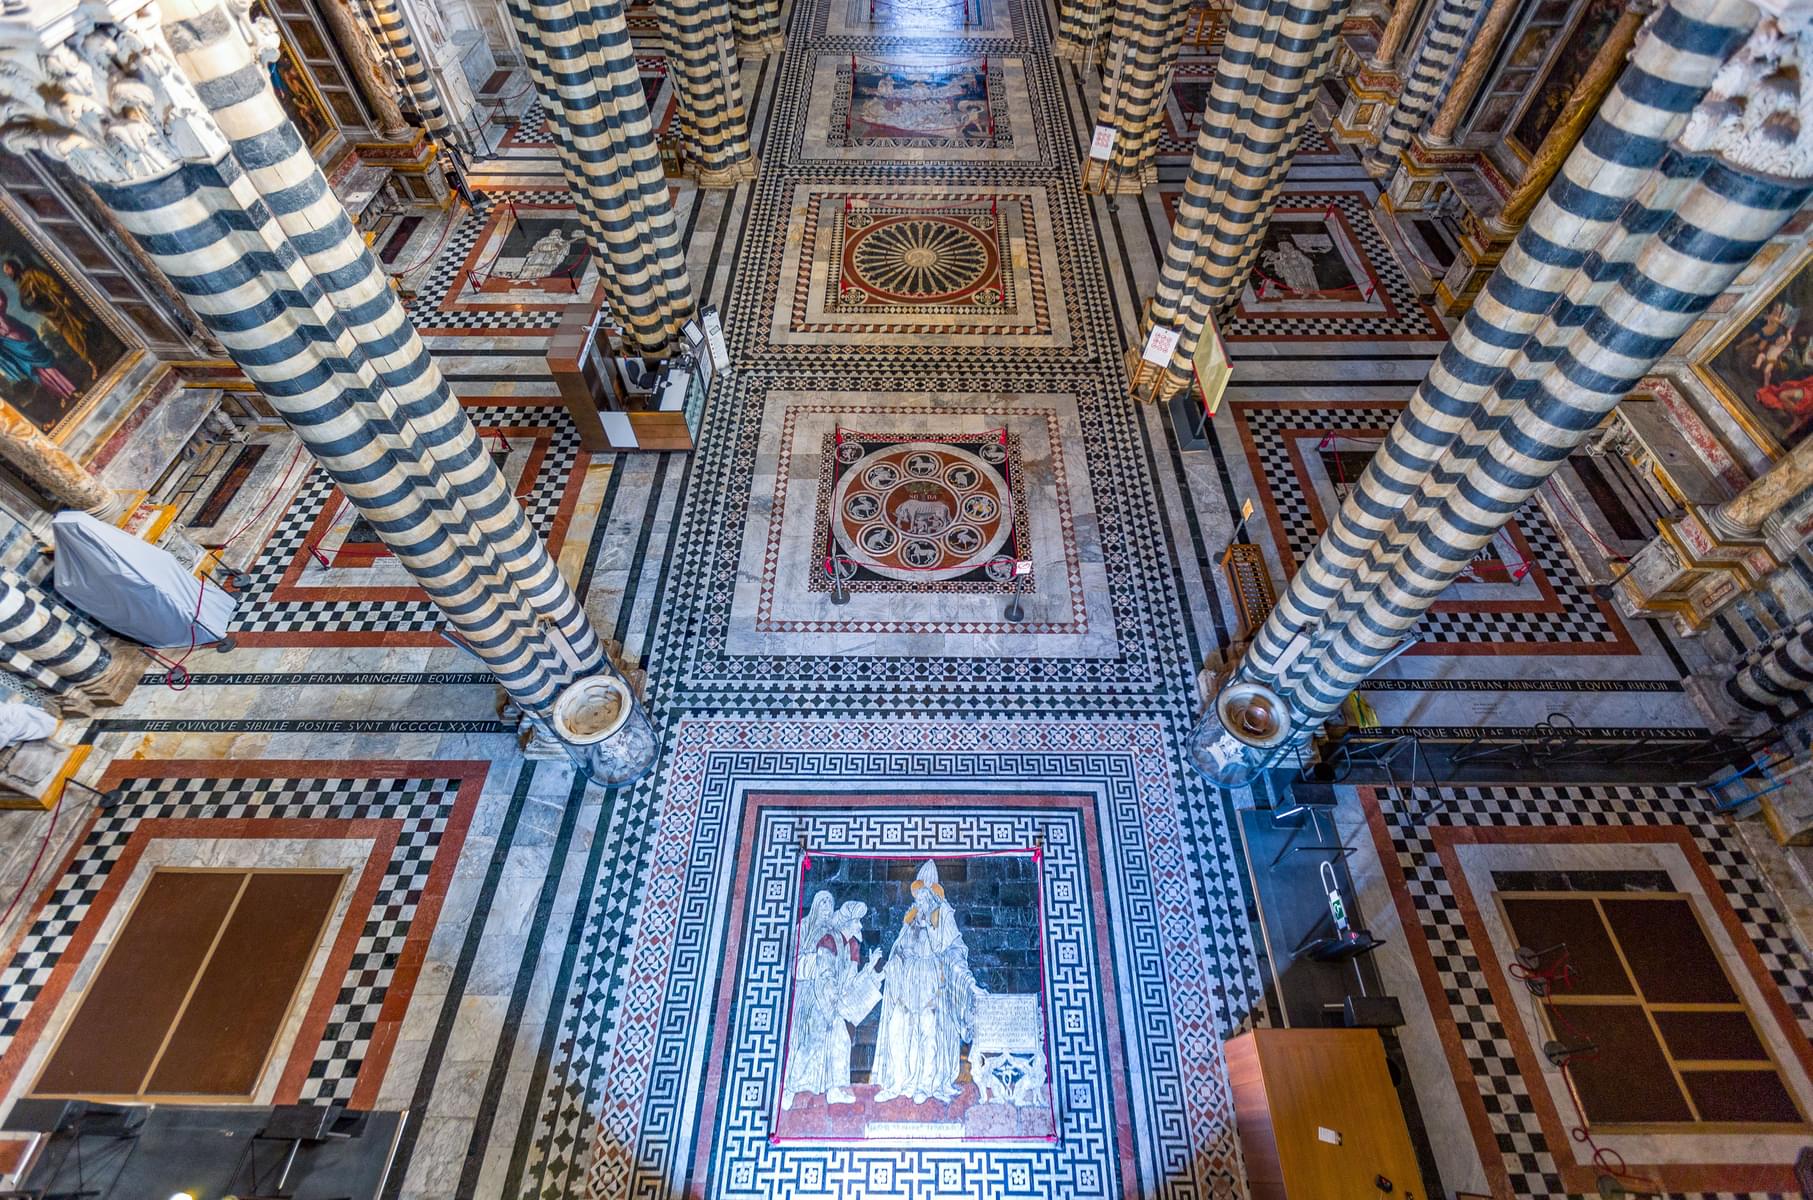 Floor Plan of Siena Cathedral 